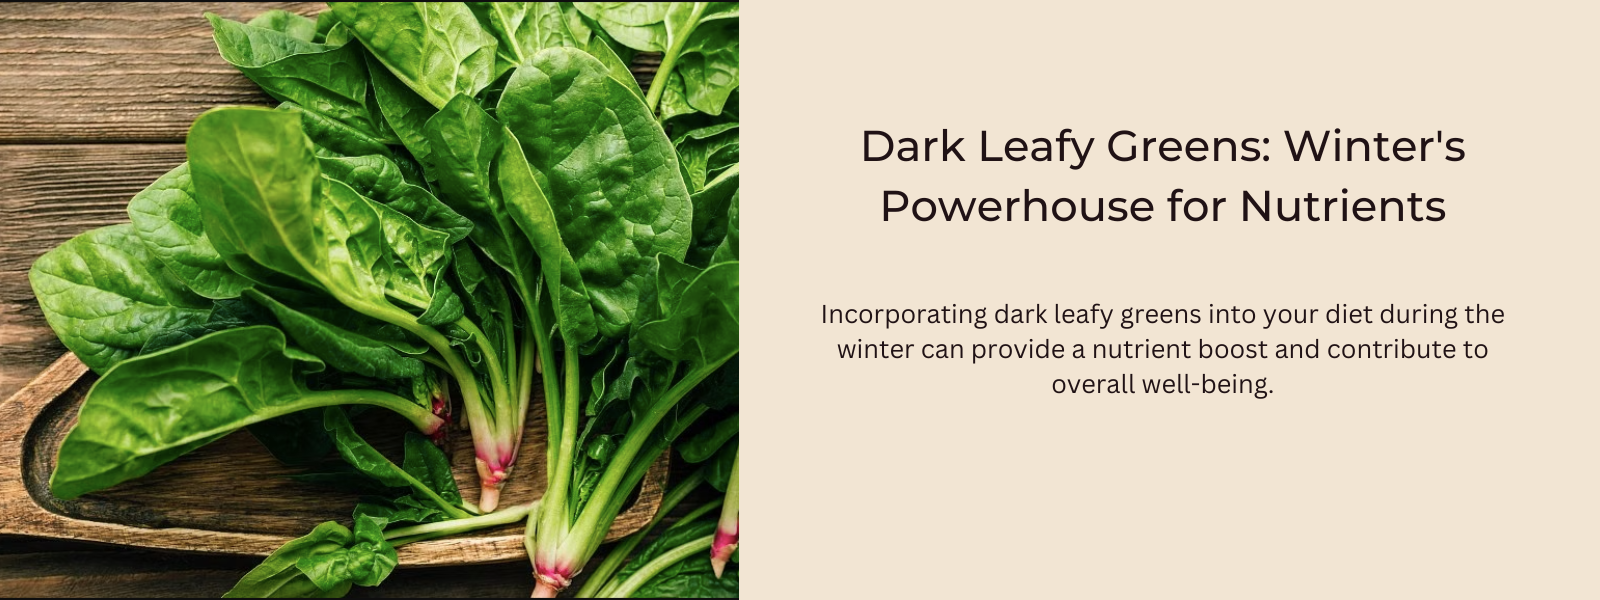 Dark Leafy Greens: Winter's Powerhouse for Nutrients